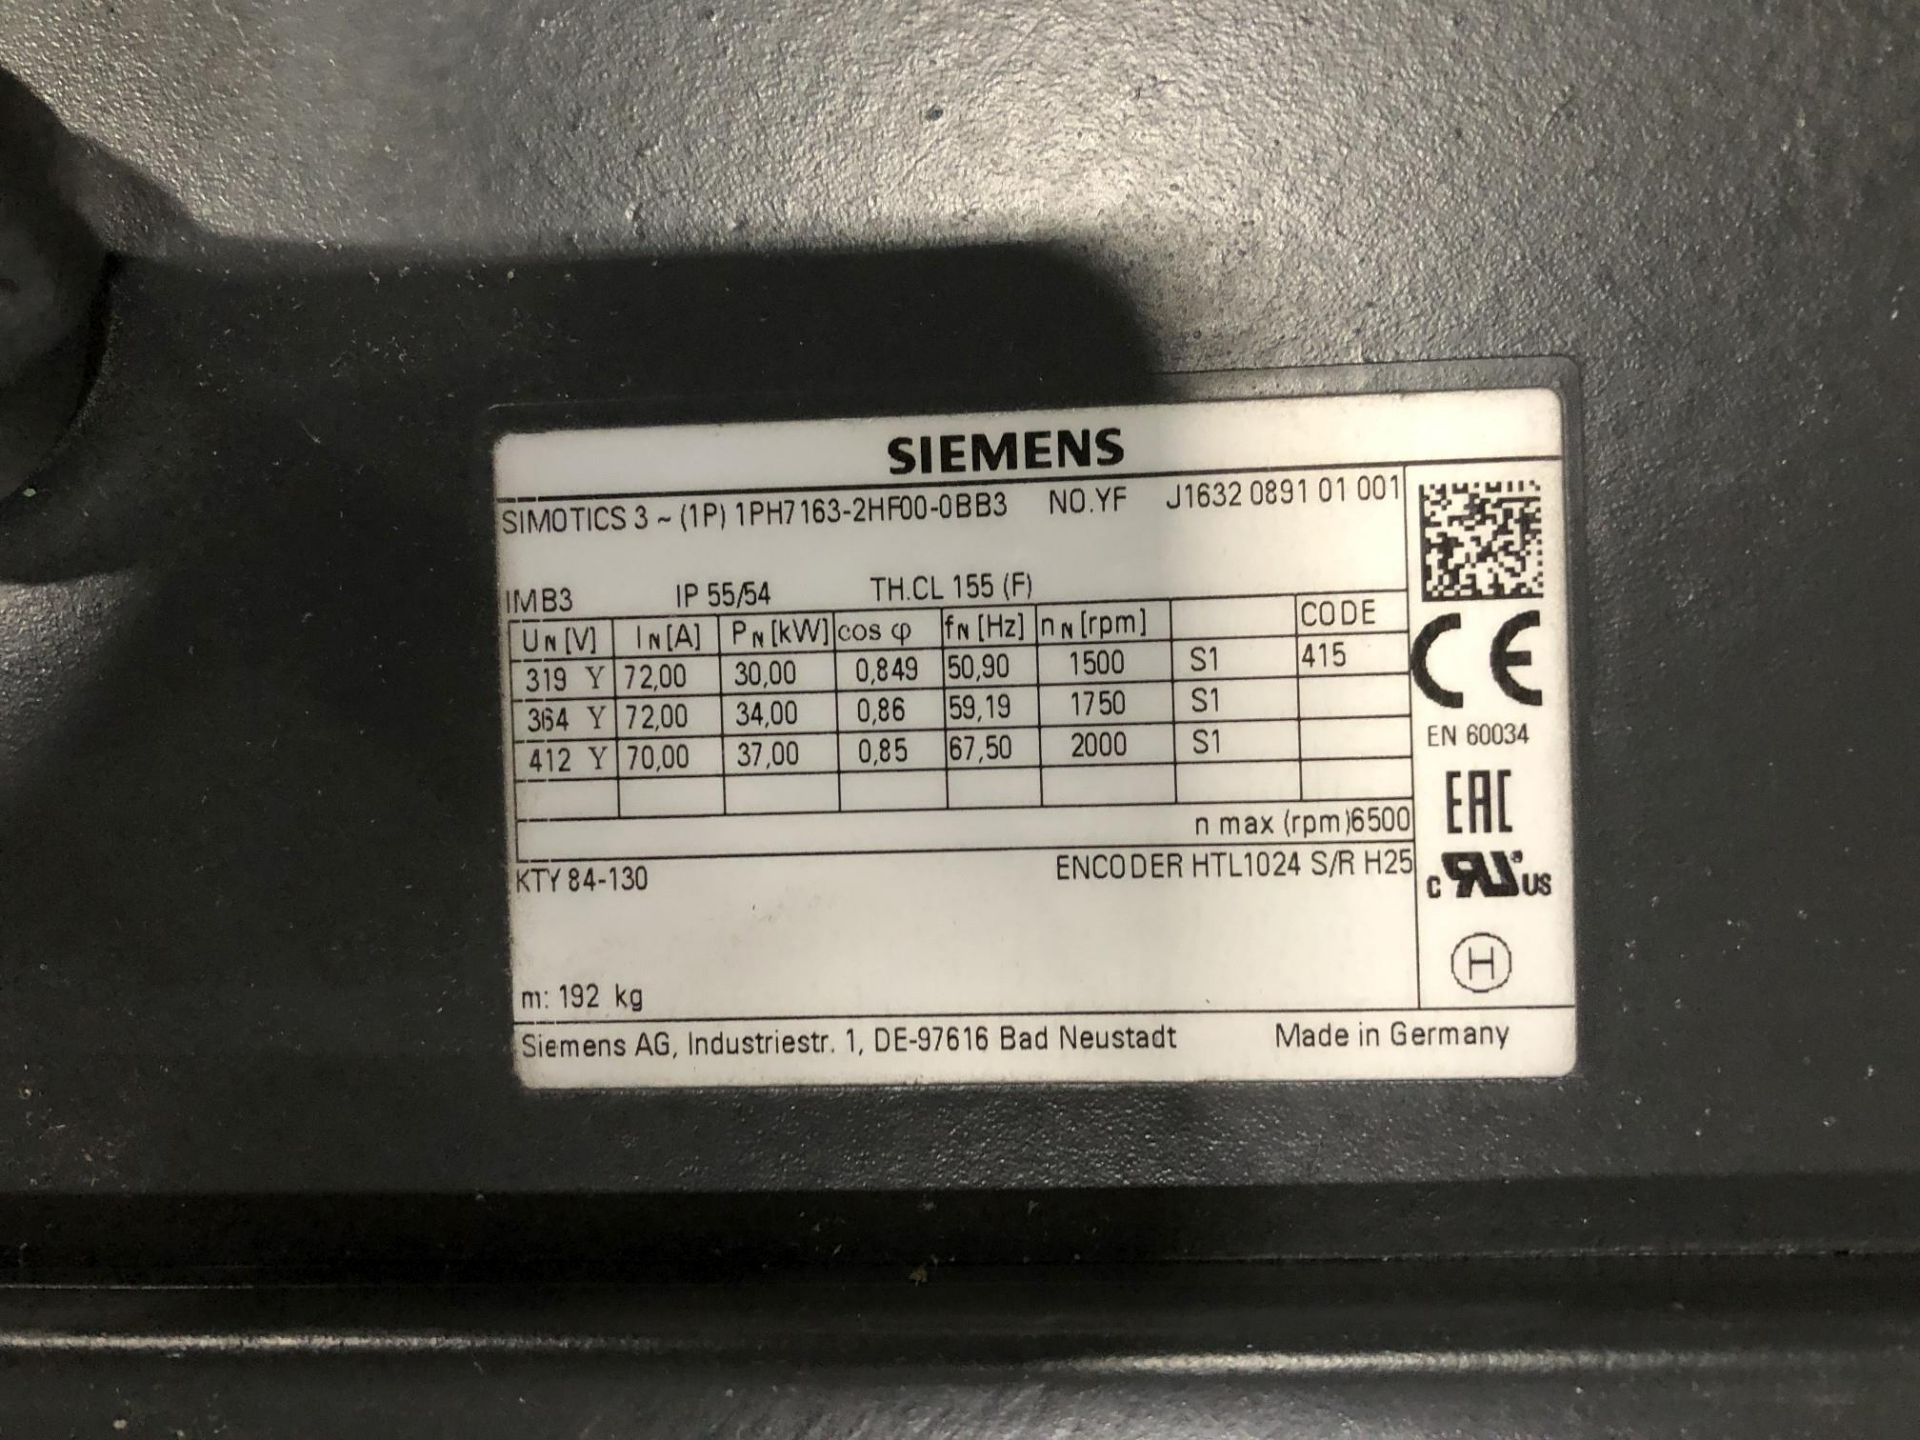 Siemens Simotics 30 kW Compact Induction Motor, 1PH7163-2HF00-0BB3 [New in Box] - Image 3 of 5